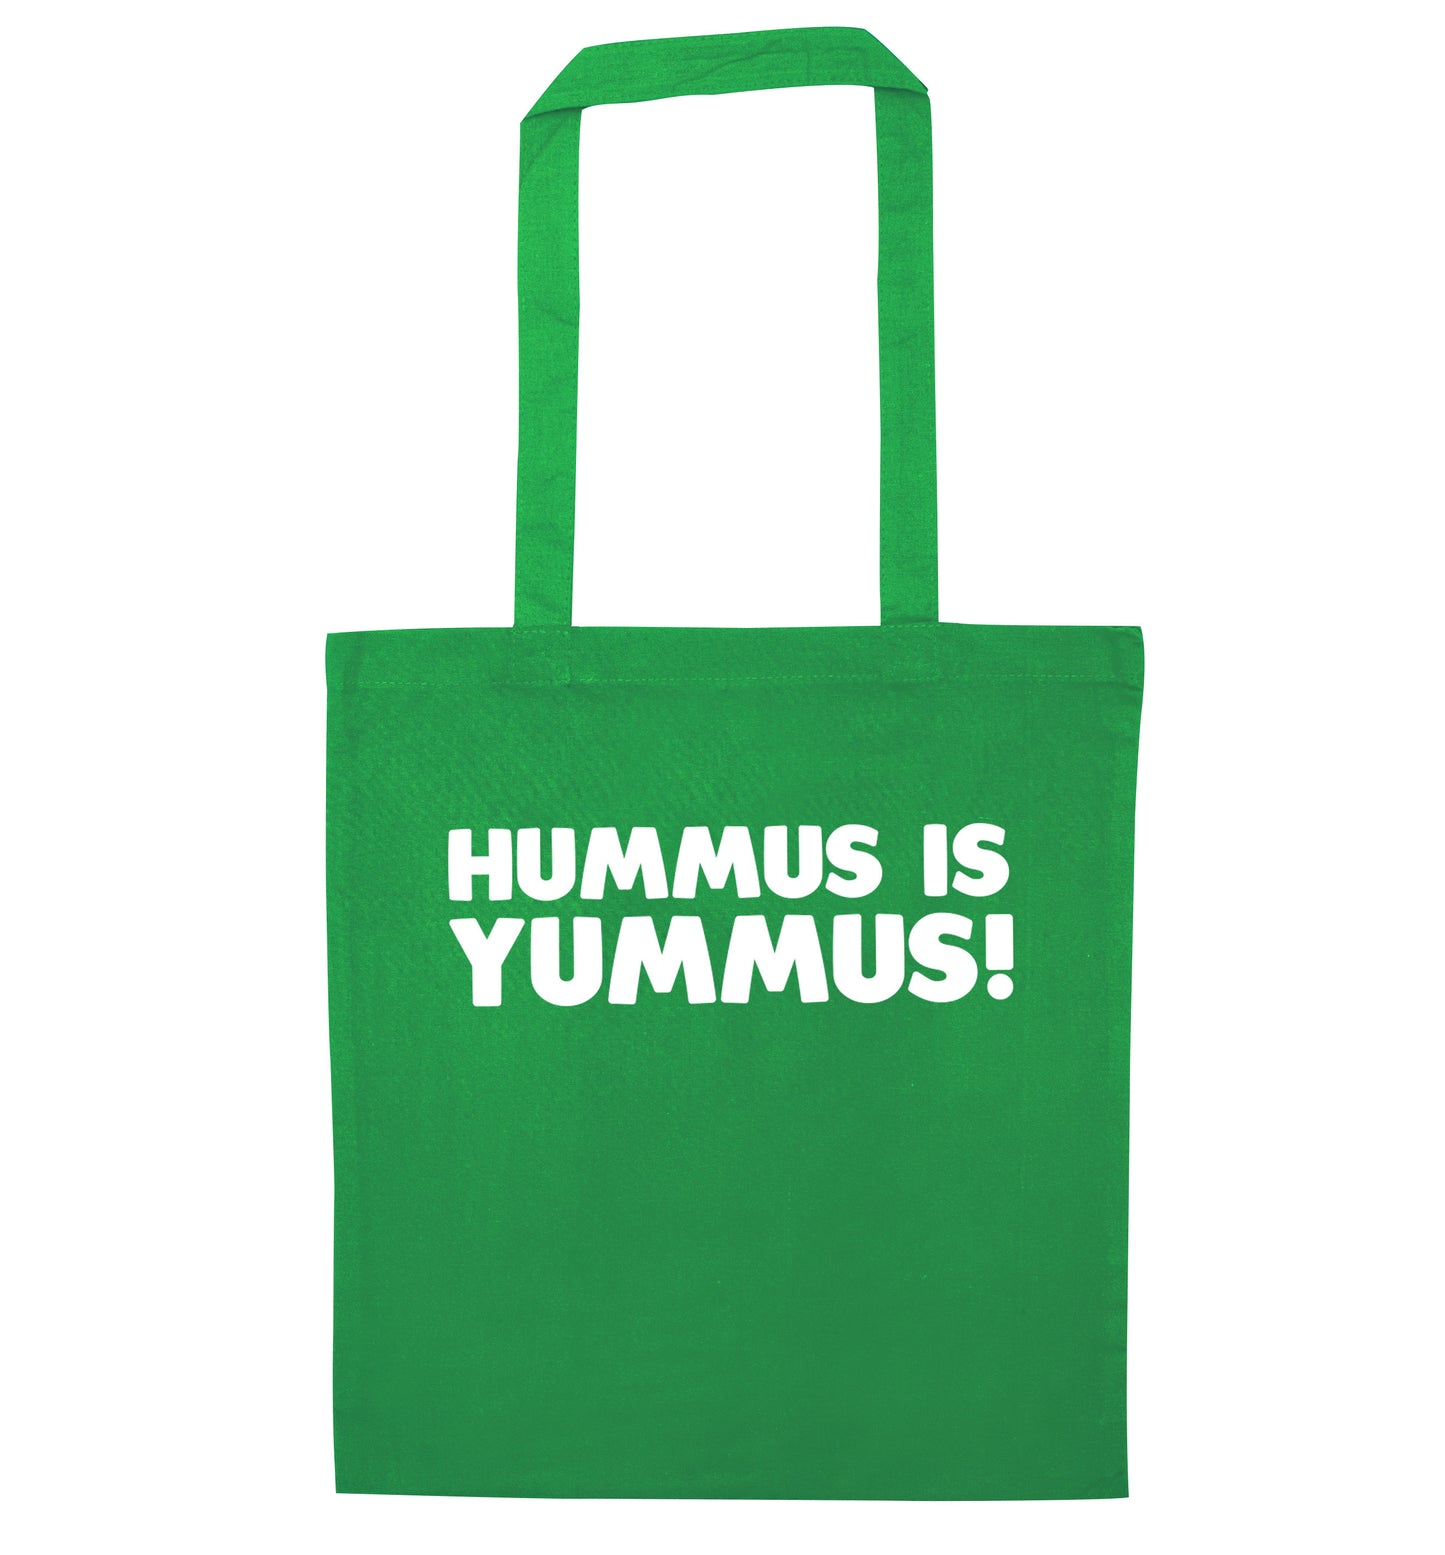 Hummus is Yummus  green tote bag